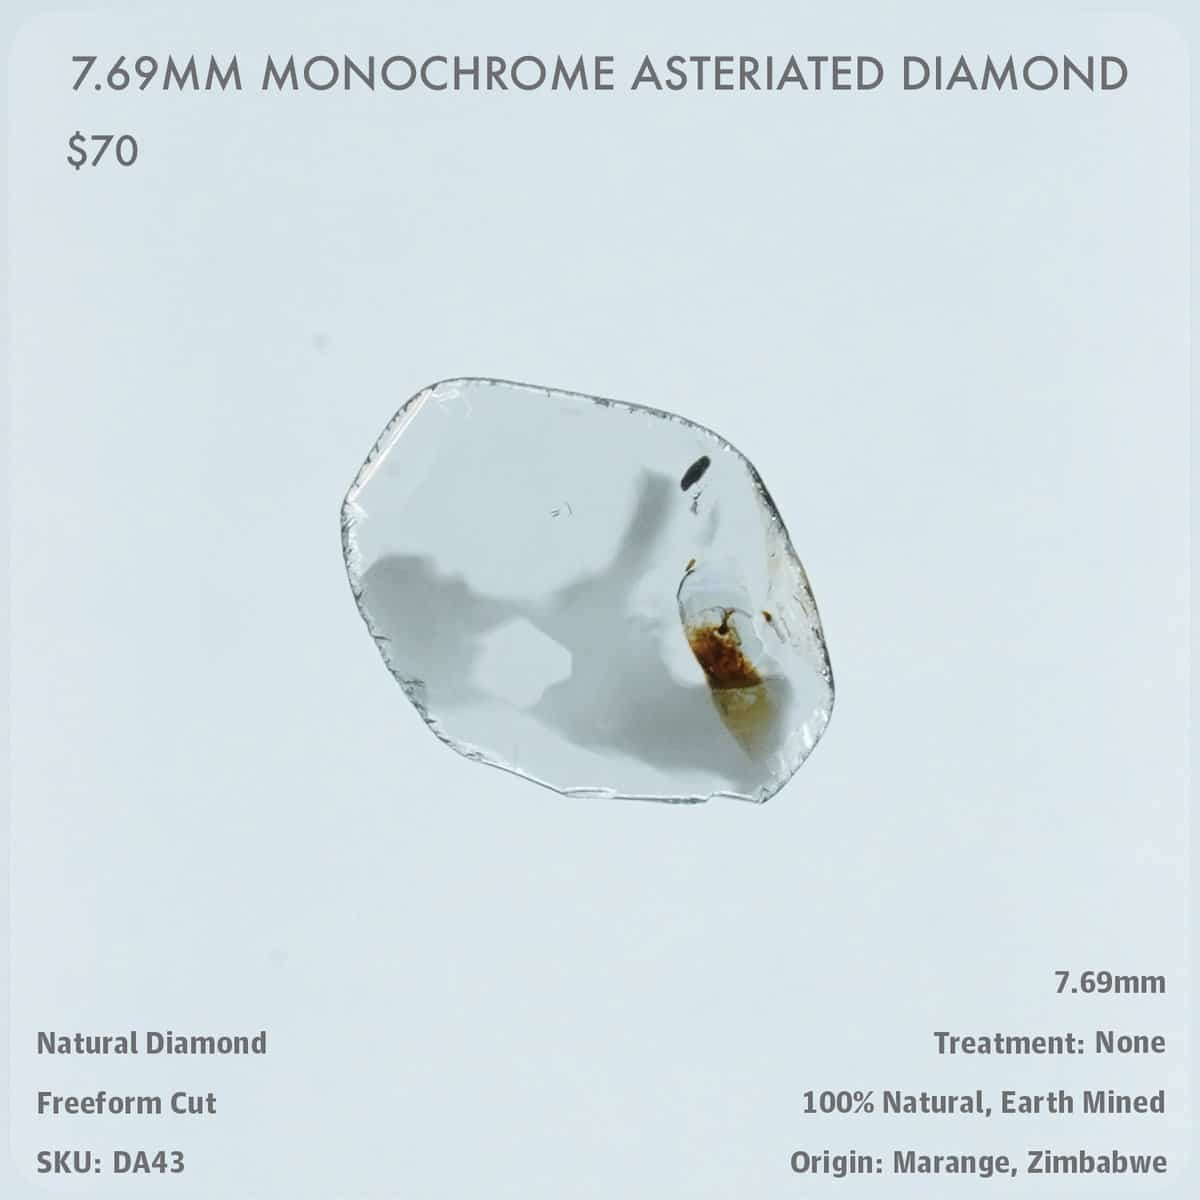 7.69mm Monochrome Asteriated Diamond